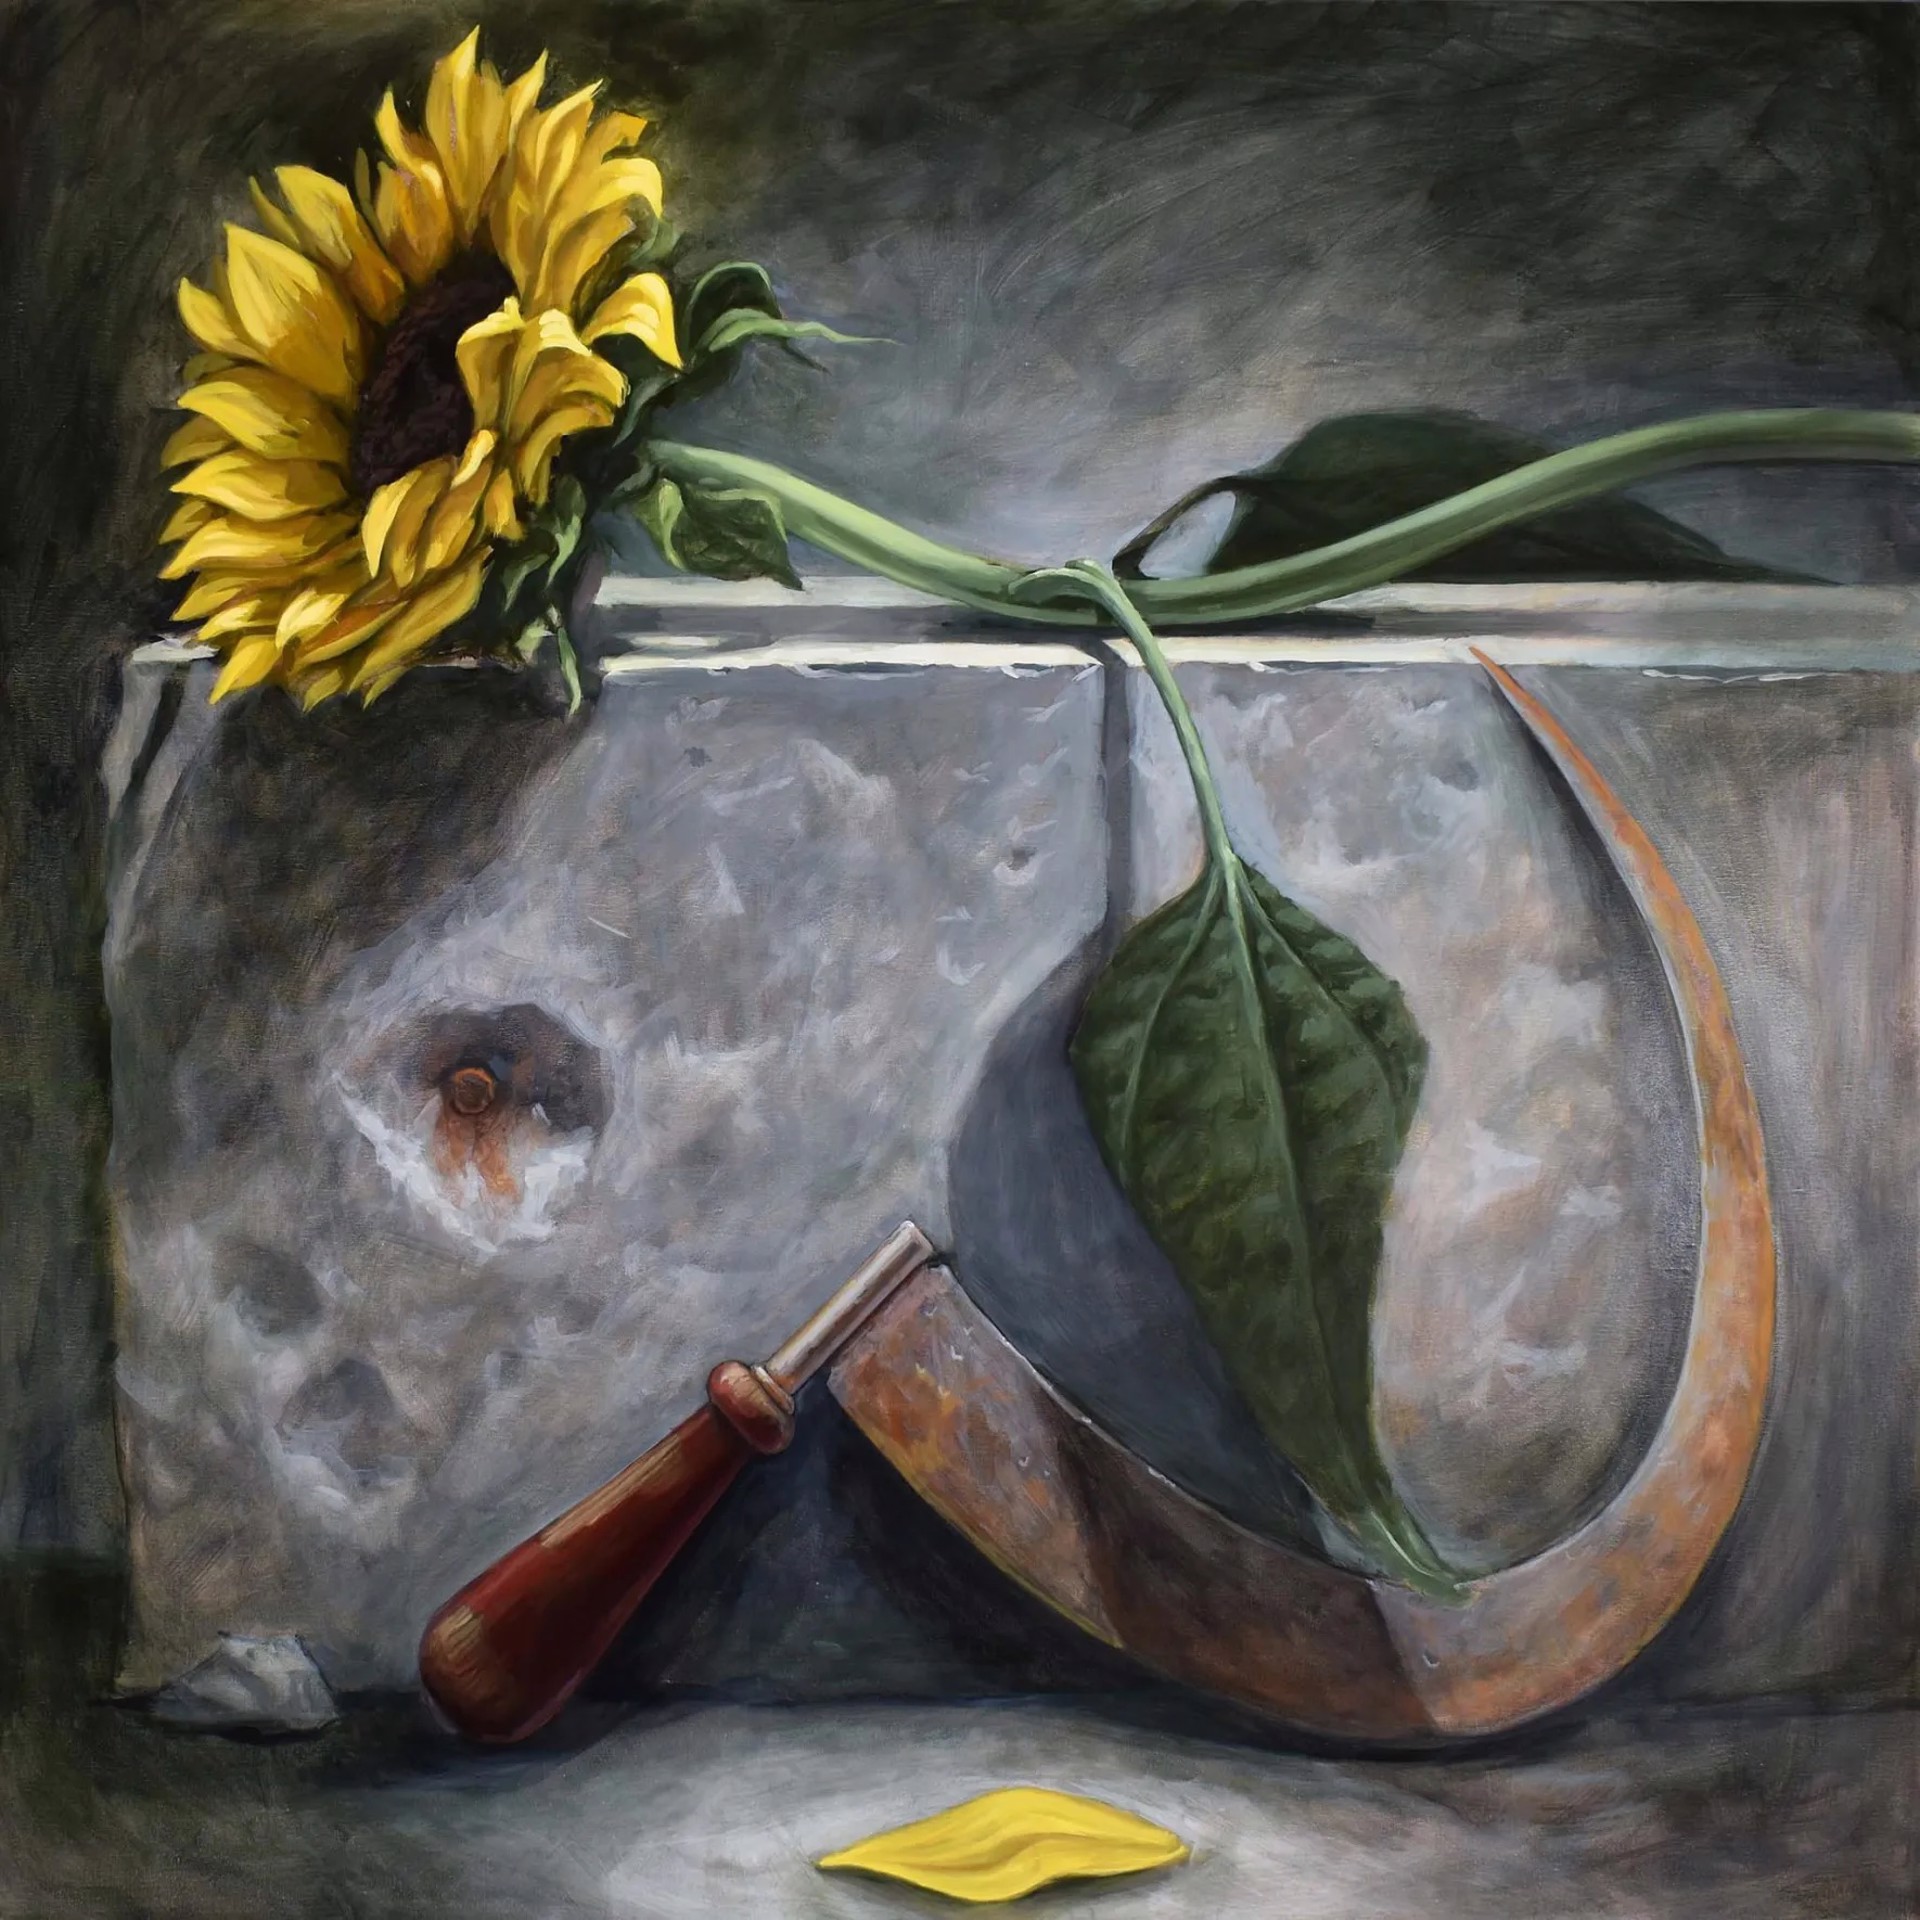 Soniashnyk (sunflower) by Brian McClear